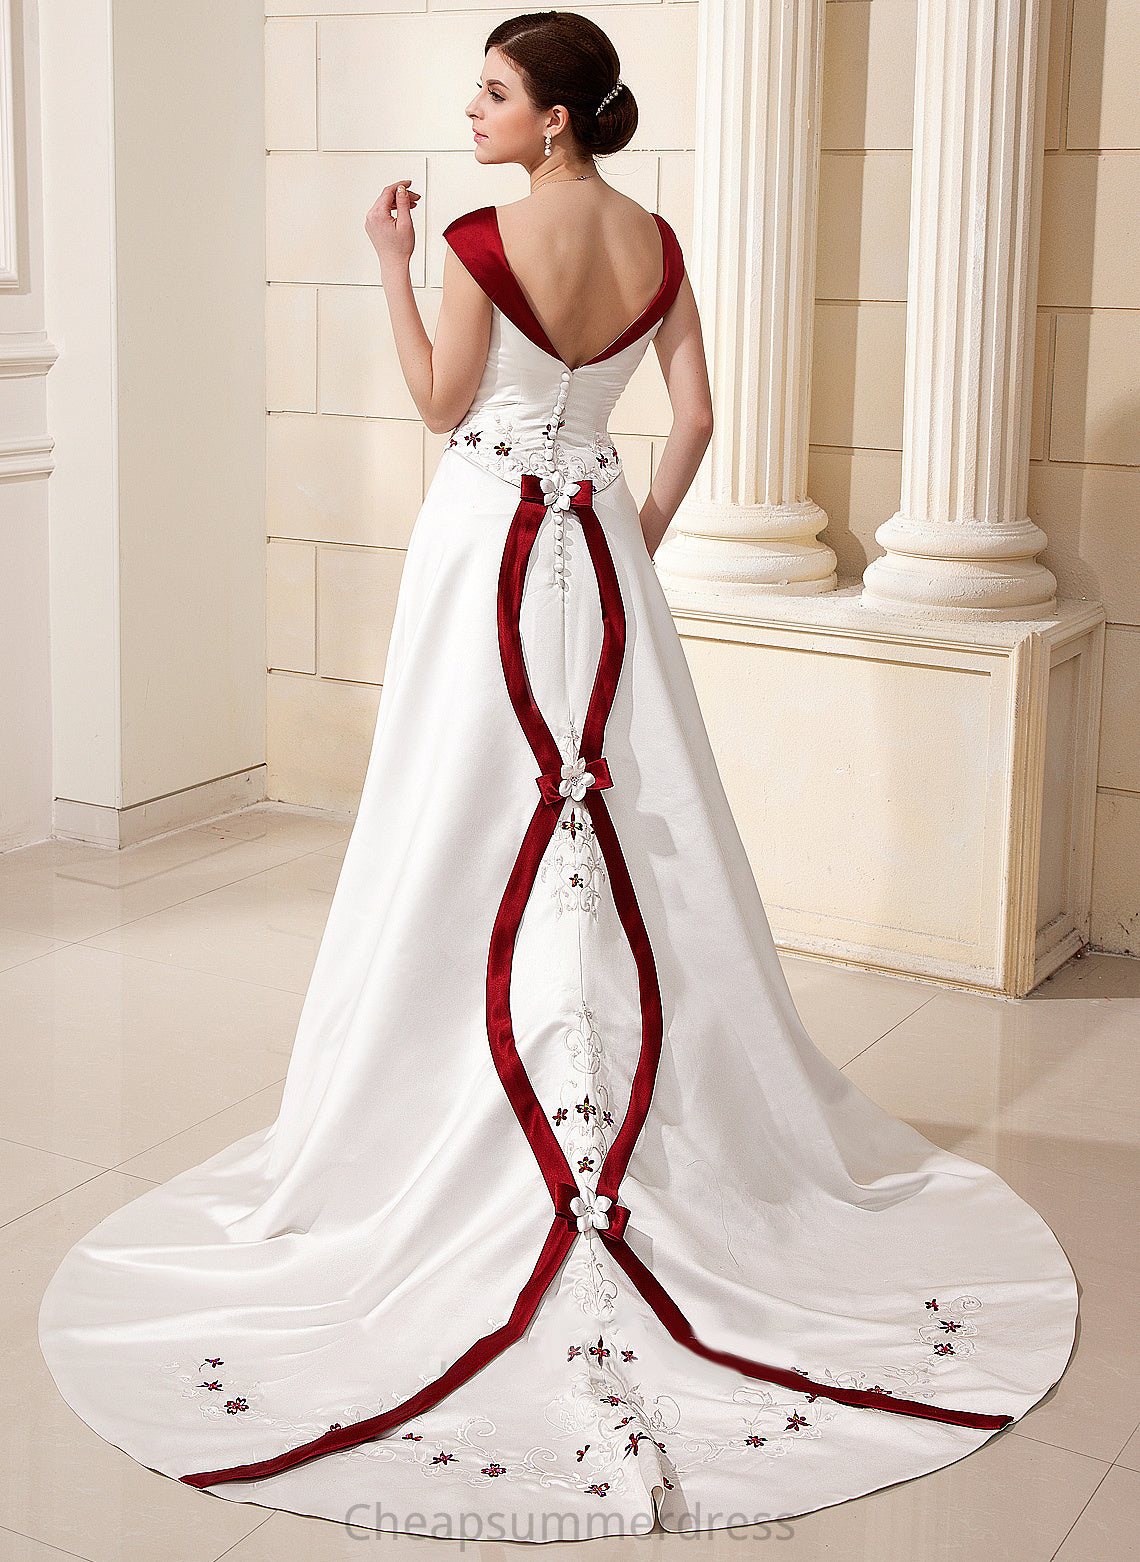 With Chapel Flower(s) Dress Wedding Beading Satin Train Ball-Gown/Princess Wedding Dresses June